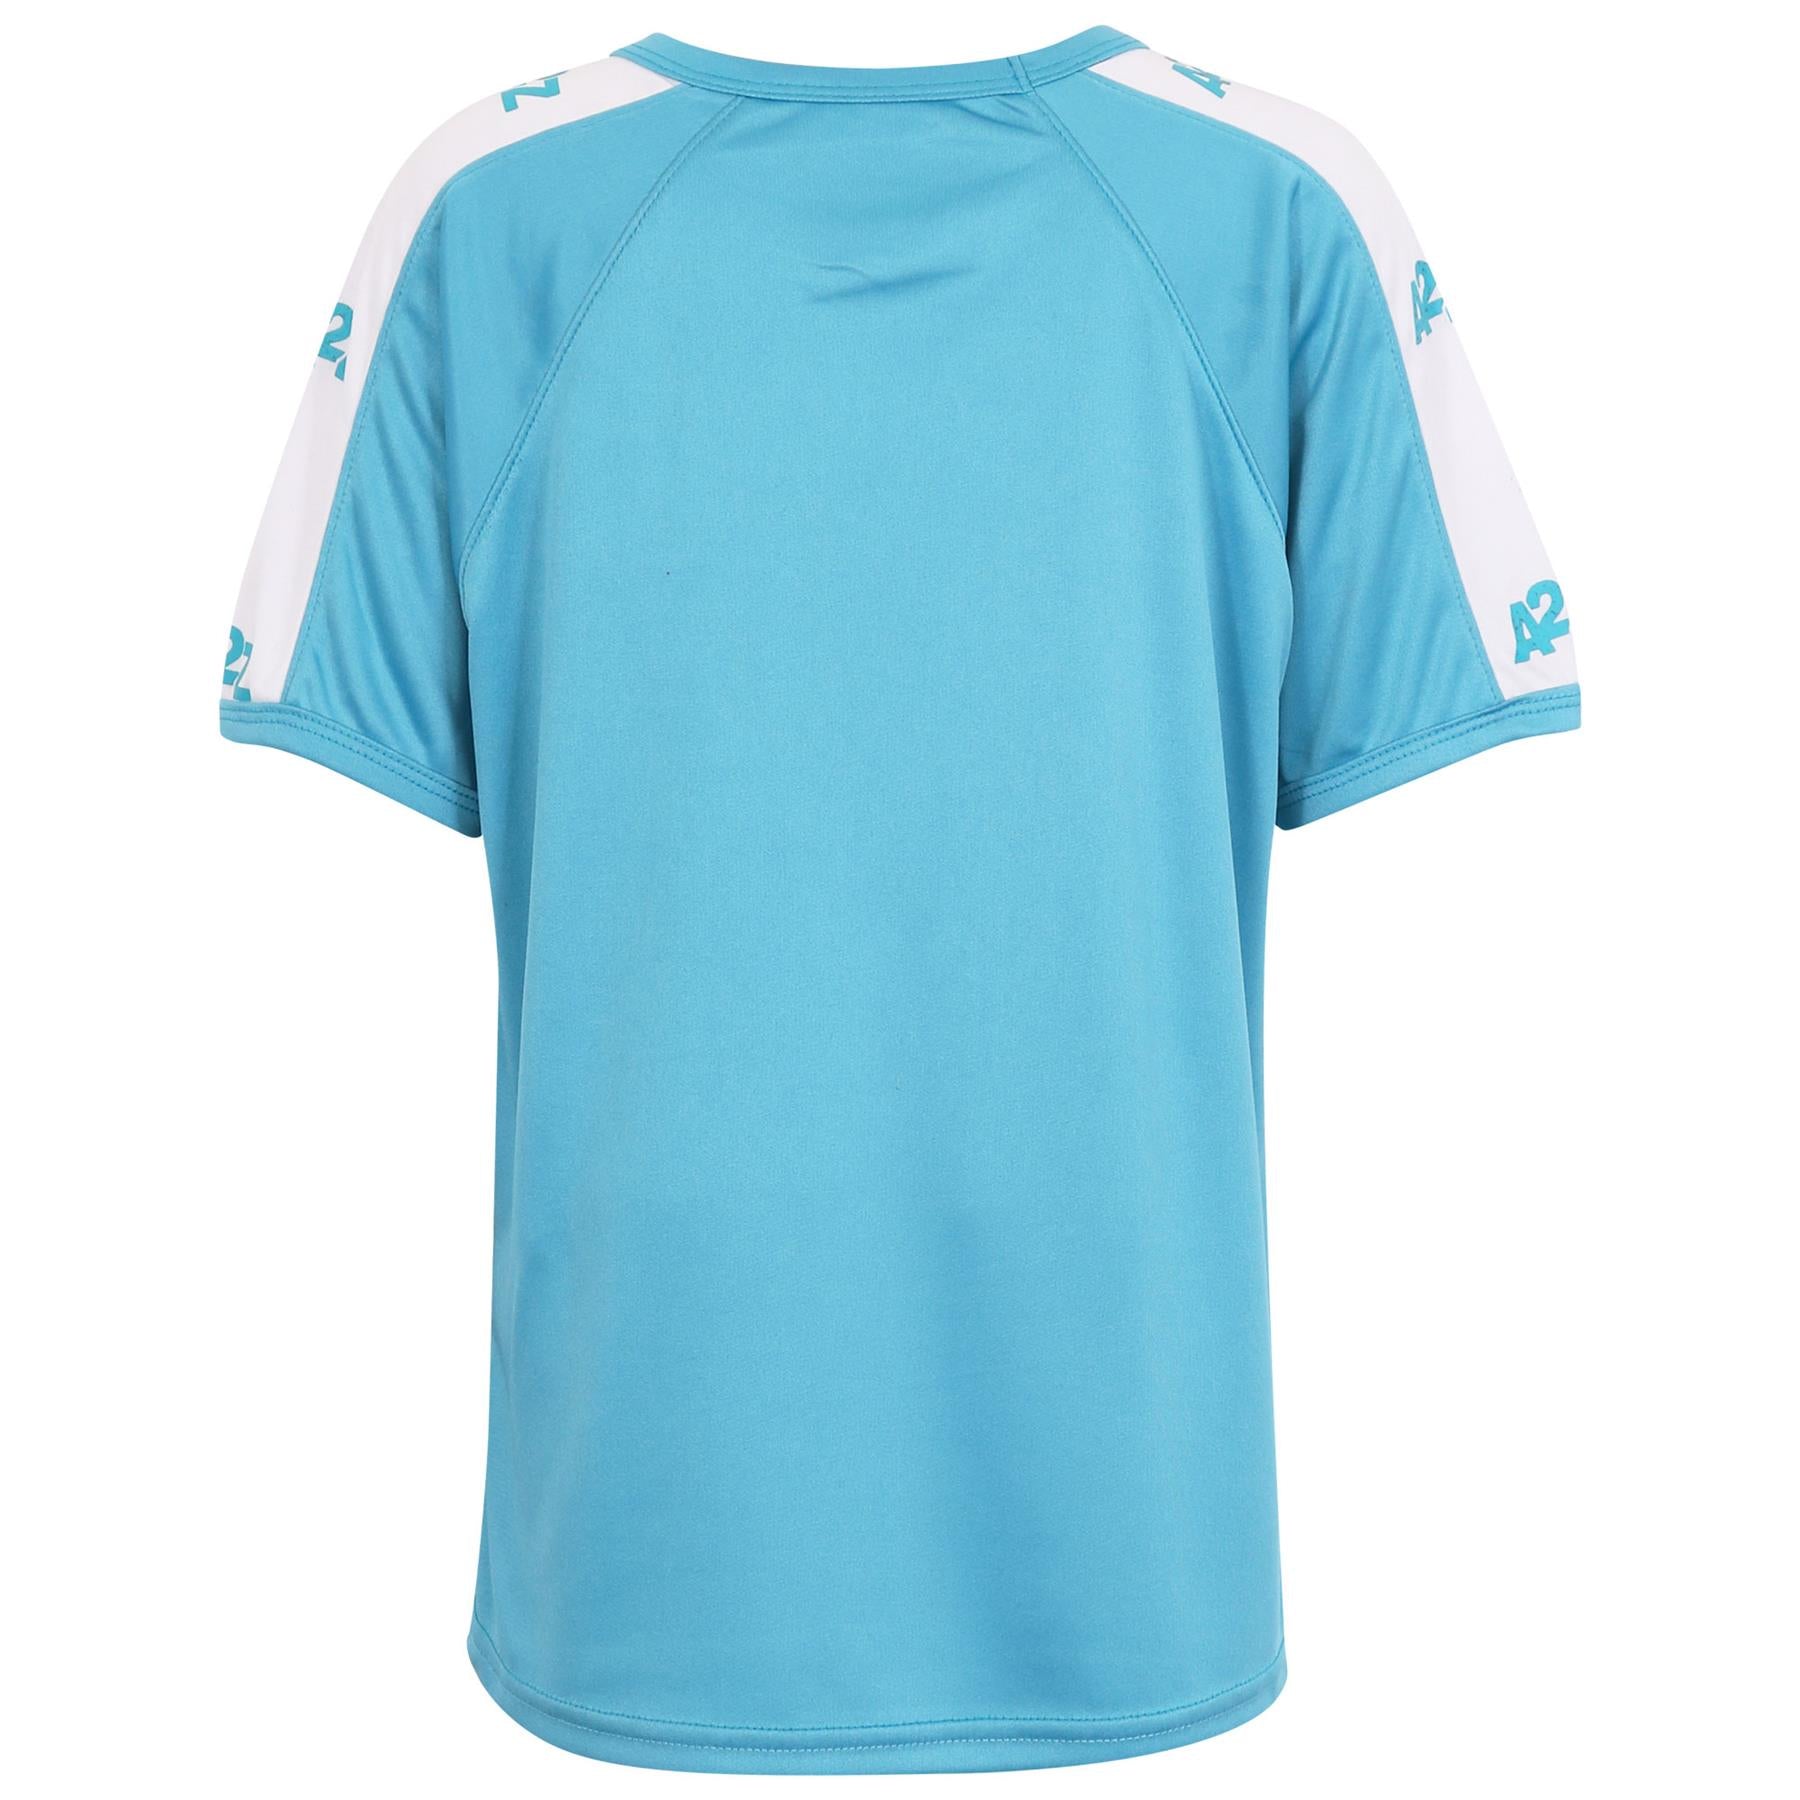 Girls Boys T Shirt Sports Blue Summer Outfit Shorts Set